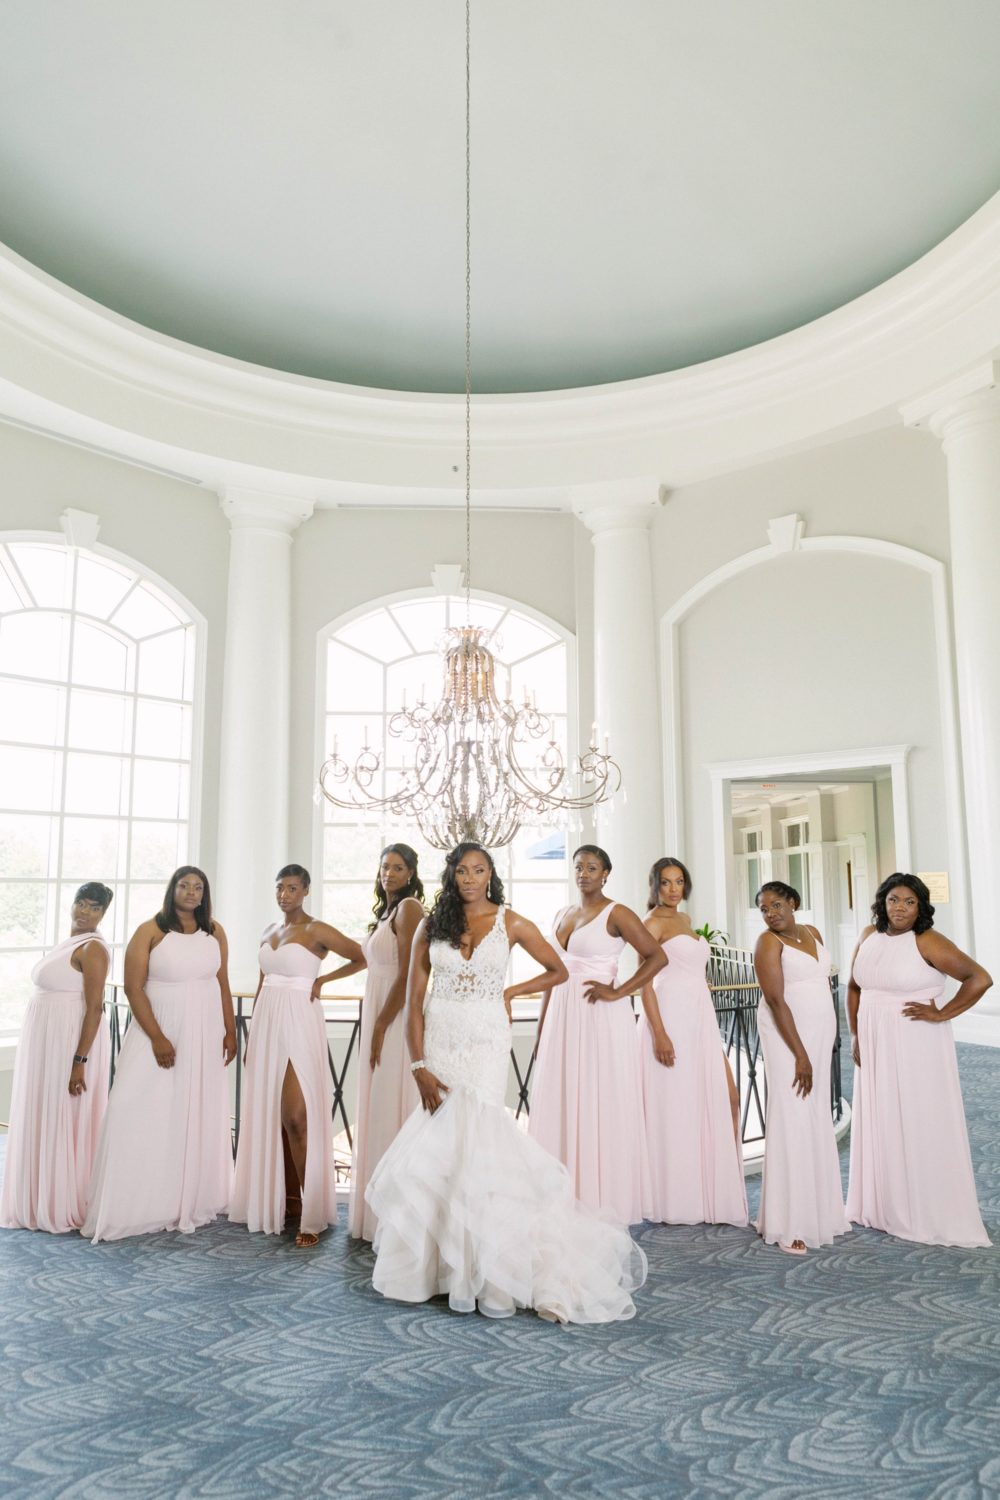 Large Bridal Party wedding photo inside the Ballantyne Hotel in Charlotte, North Carolina | Photo by Samantha Clarke